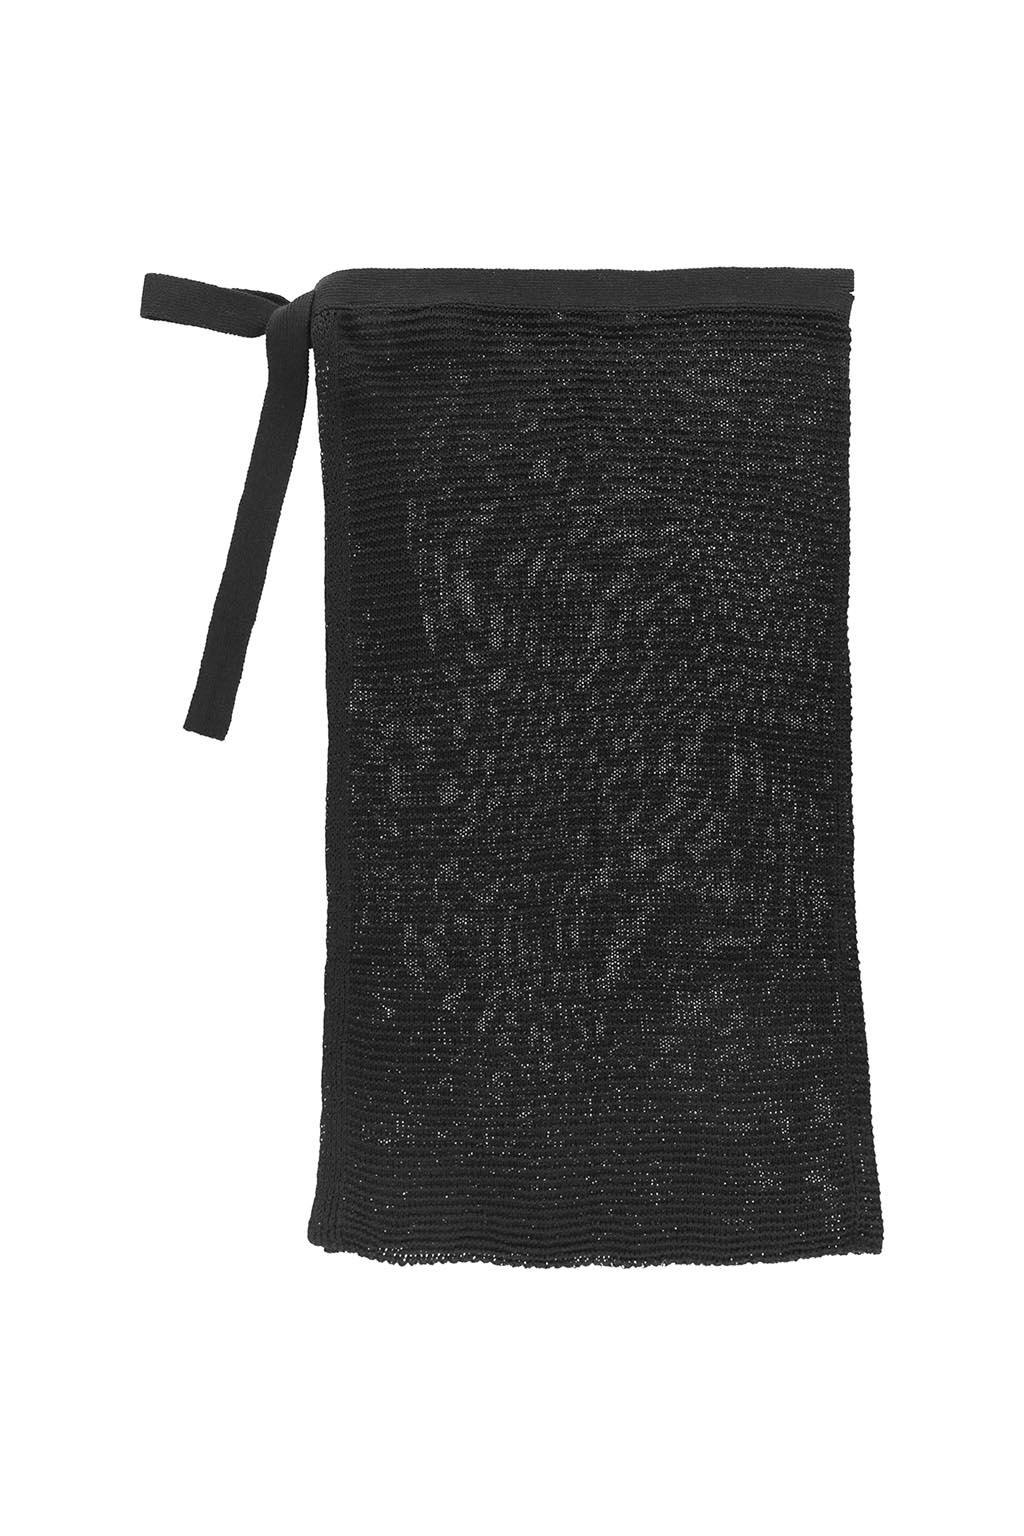 Knit Wrap Skirt Black 7